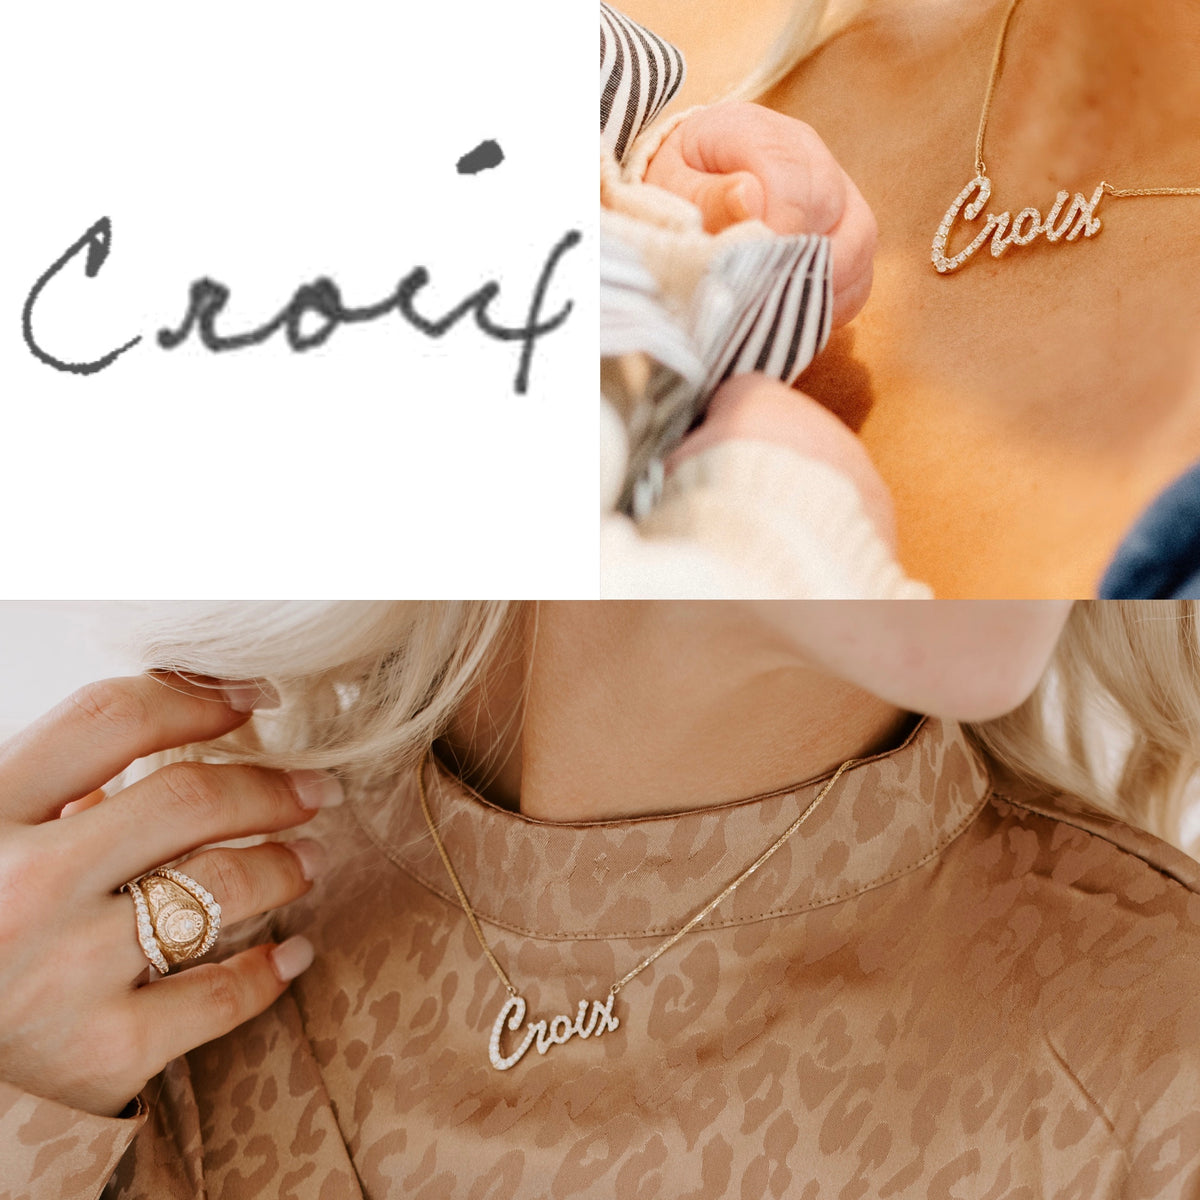 Custom Handwritten Diamond Name Necklace "Croix"